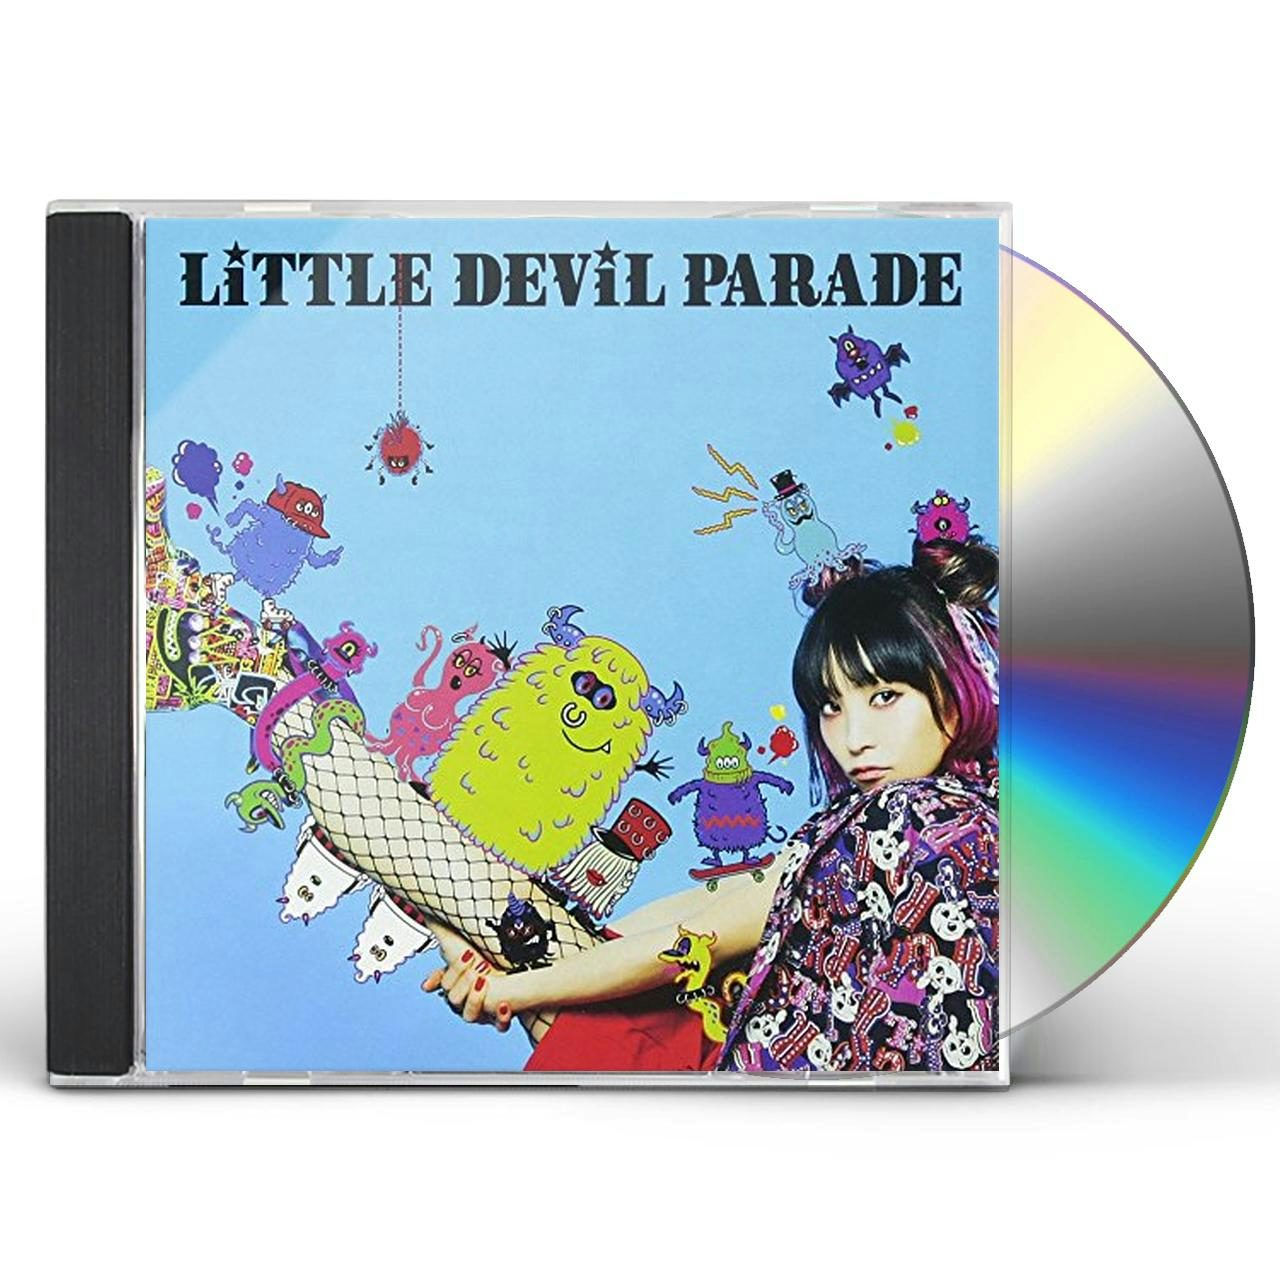 Lisa Little Devil Parade Deluxe Edition Cd